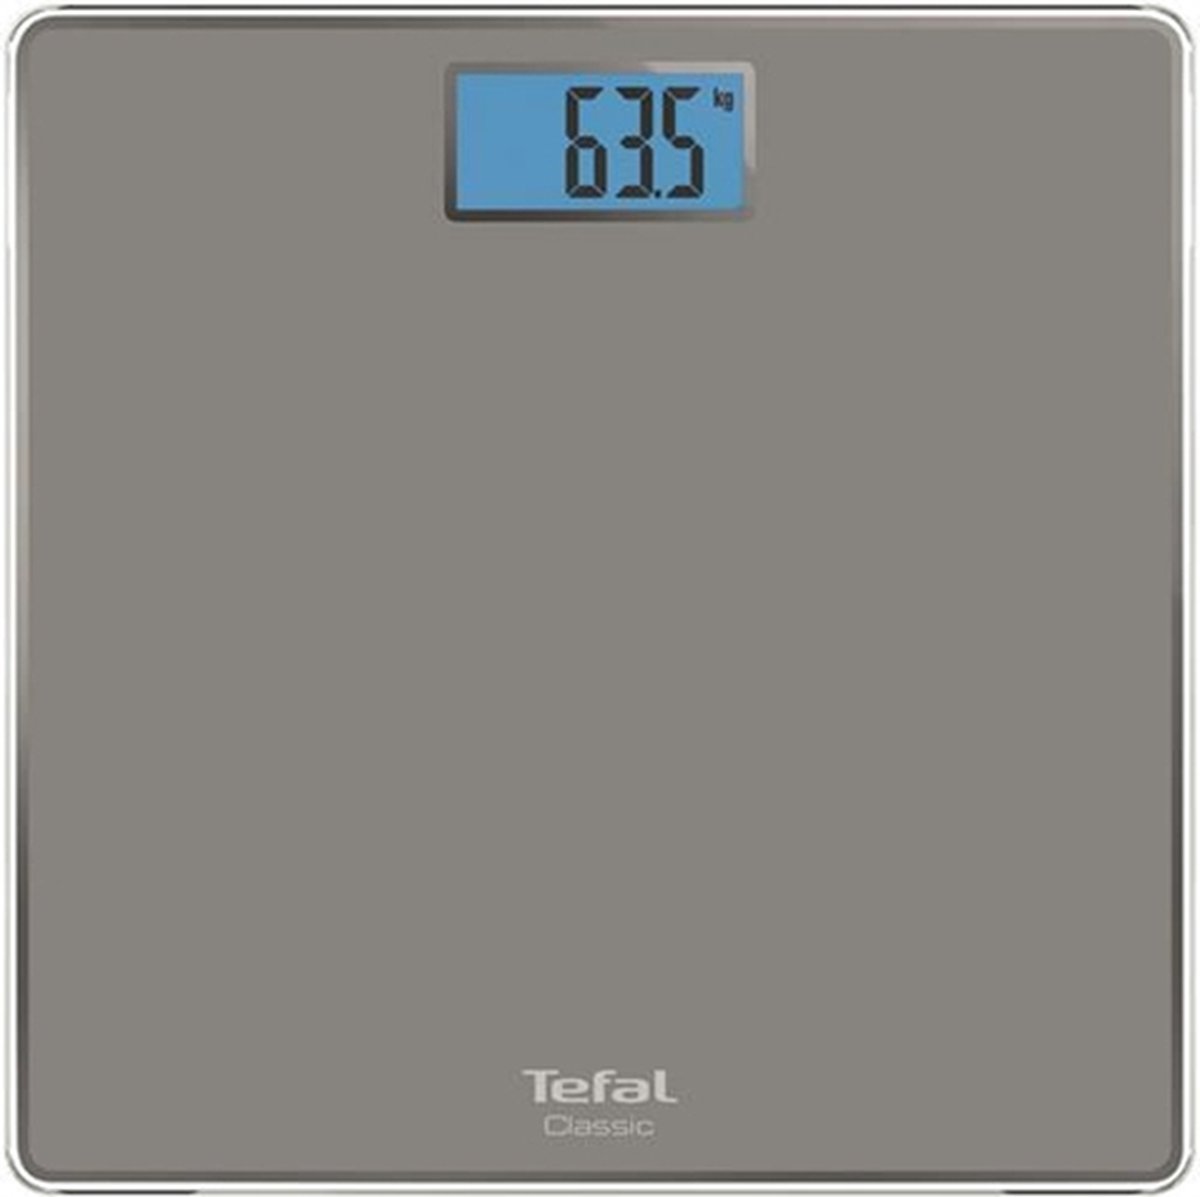 Tefal Classic PP1500 - Digitale personenweegschaal - 100 g nauwkeurig - Tot  160 kg - Grijs | bol.com